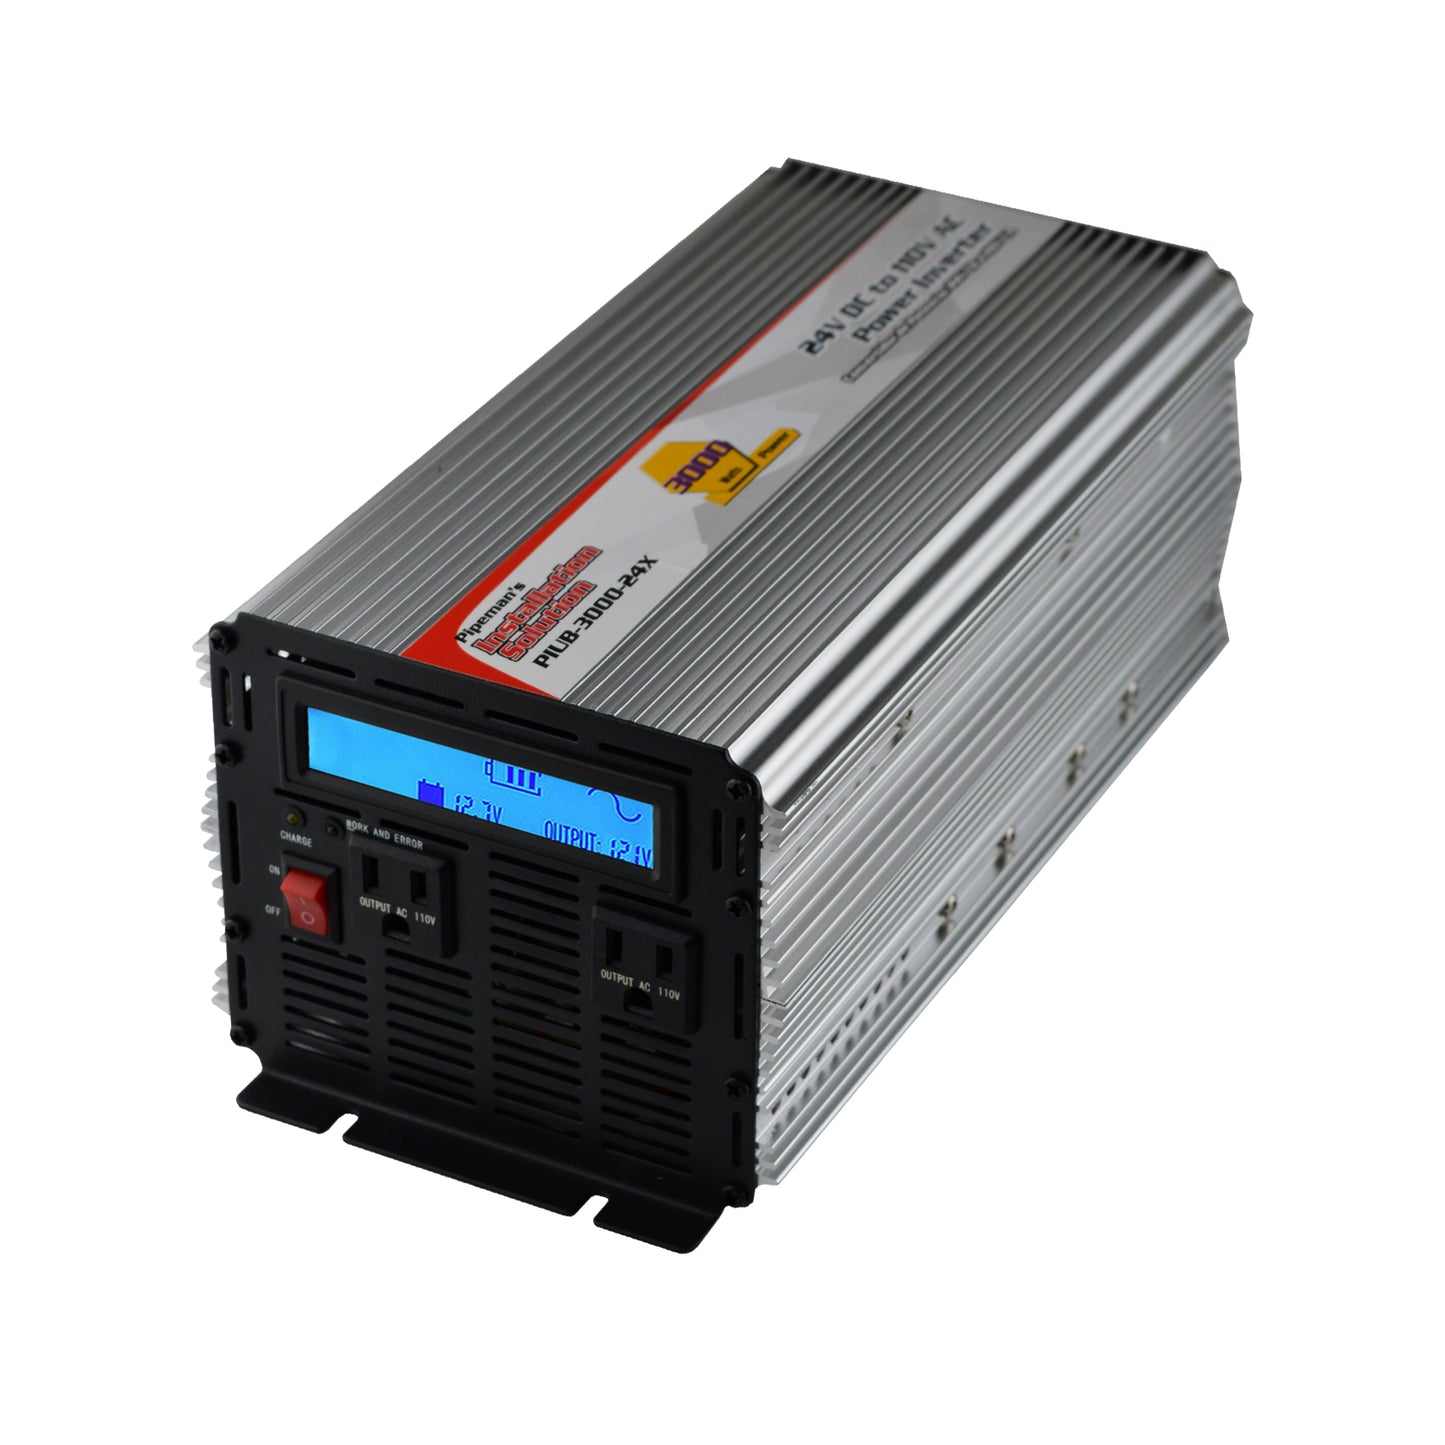 PIUB-3000-24X - 3000 Watts 24V DC to 110V AC Power Inverter & Battery Charger